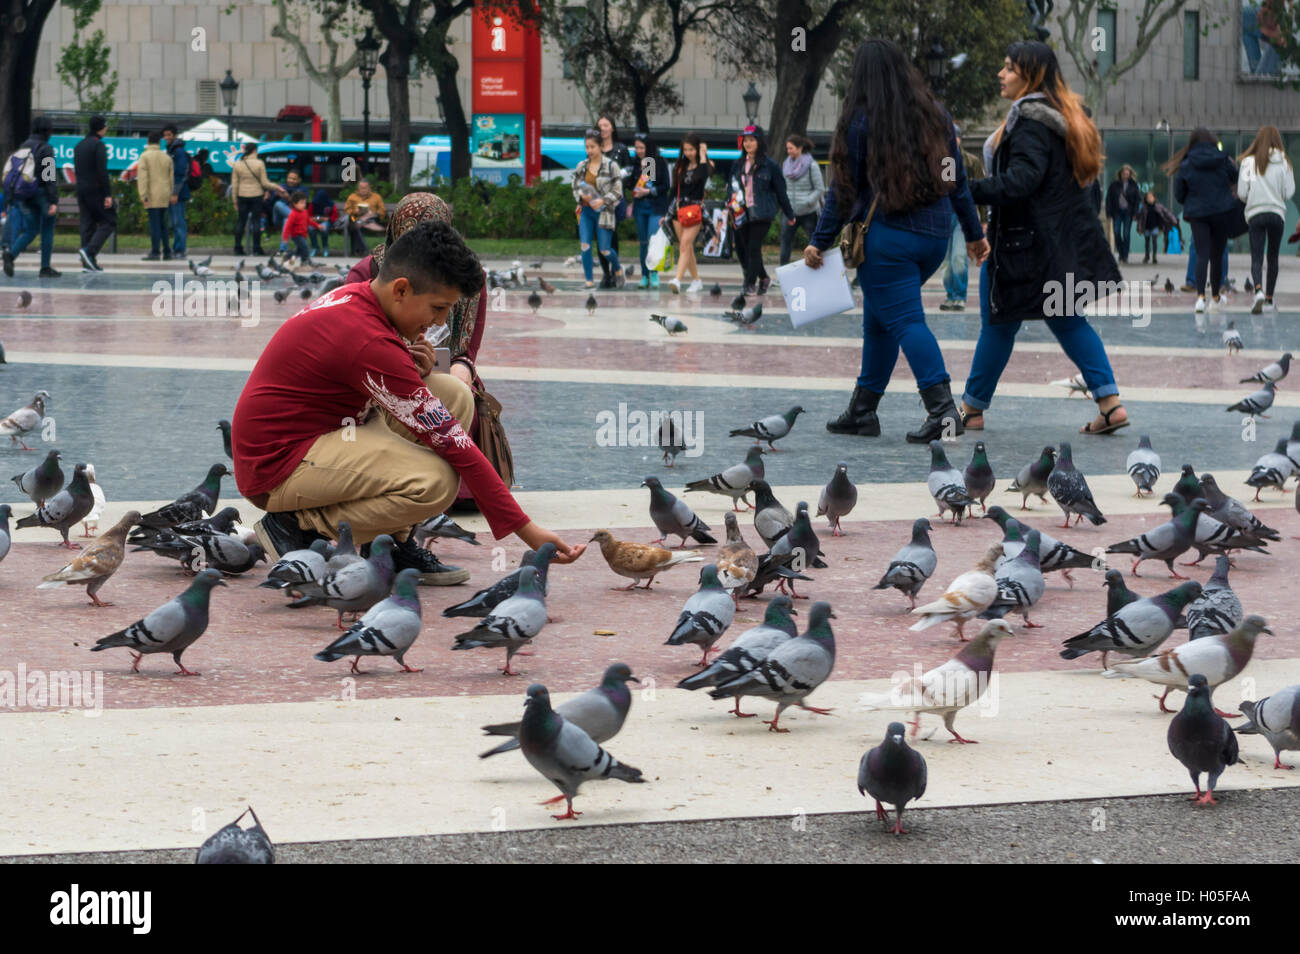 Garçon musulman nourrir les pigeons de la rue de Barcelone. Banque D'Images